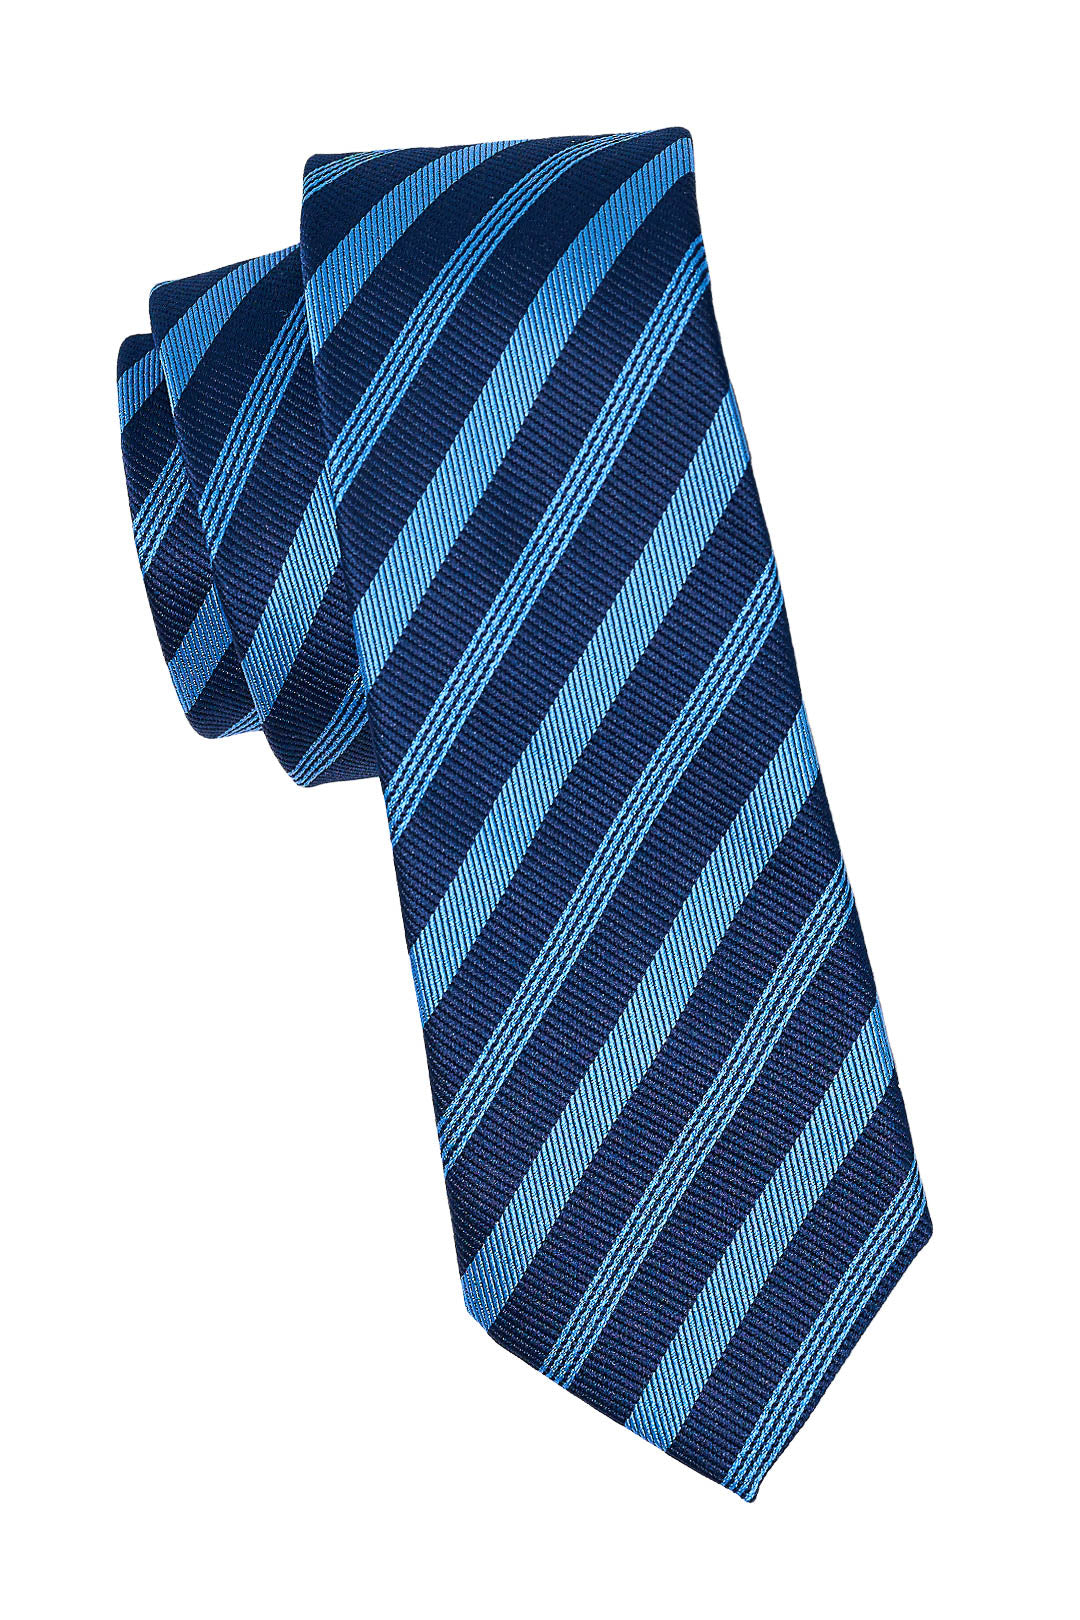 Blue Rep Tie